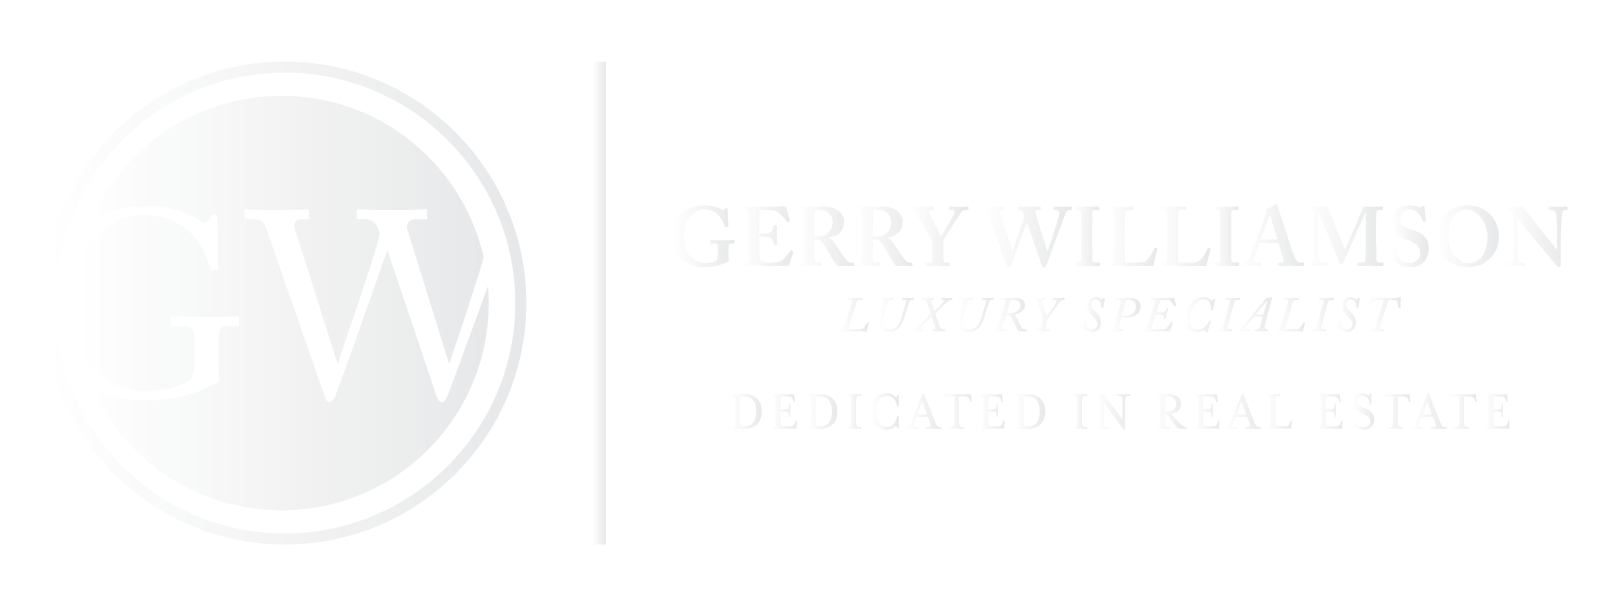 Gerry Williamson Logos_Silver